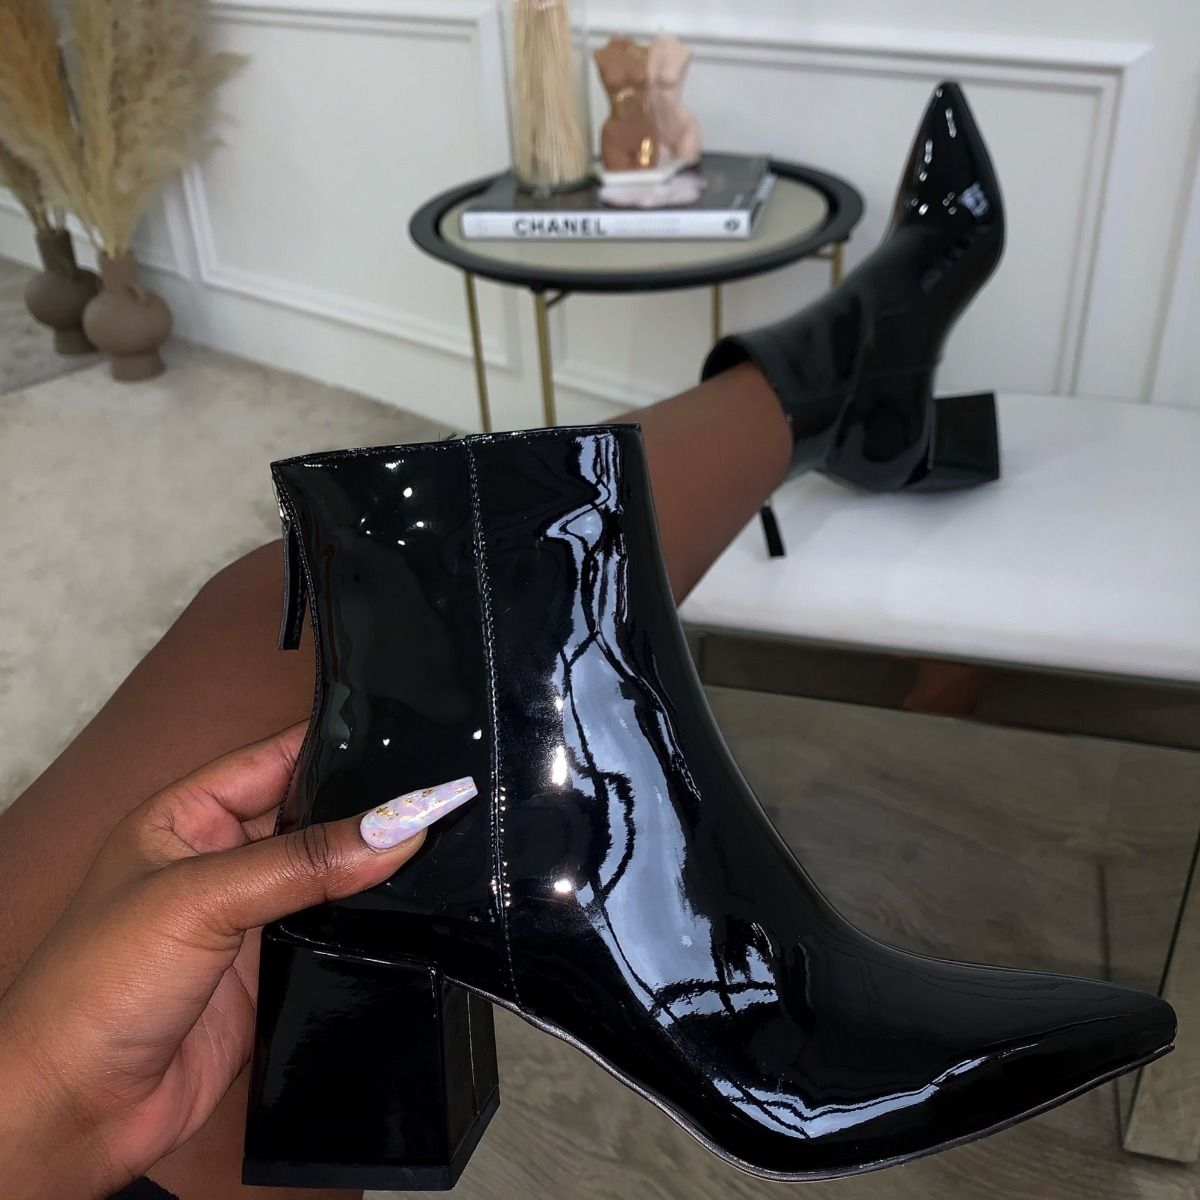 black patent ankle boots block heel